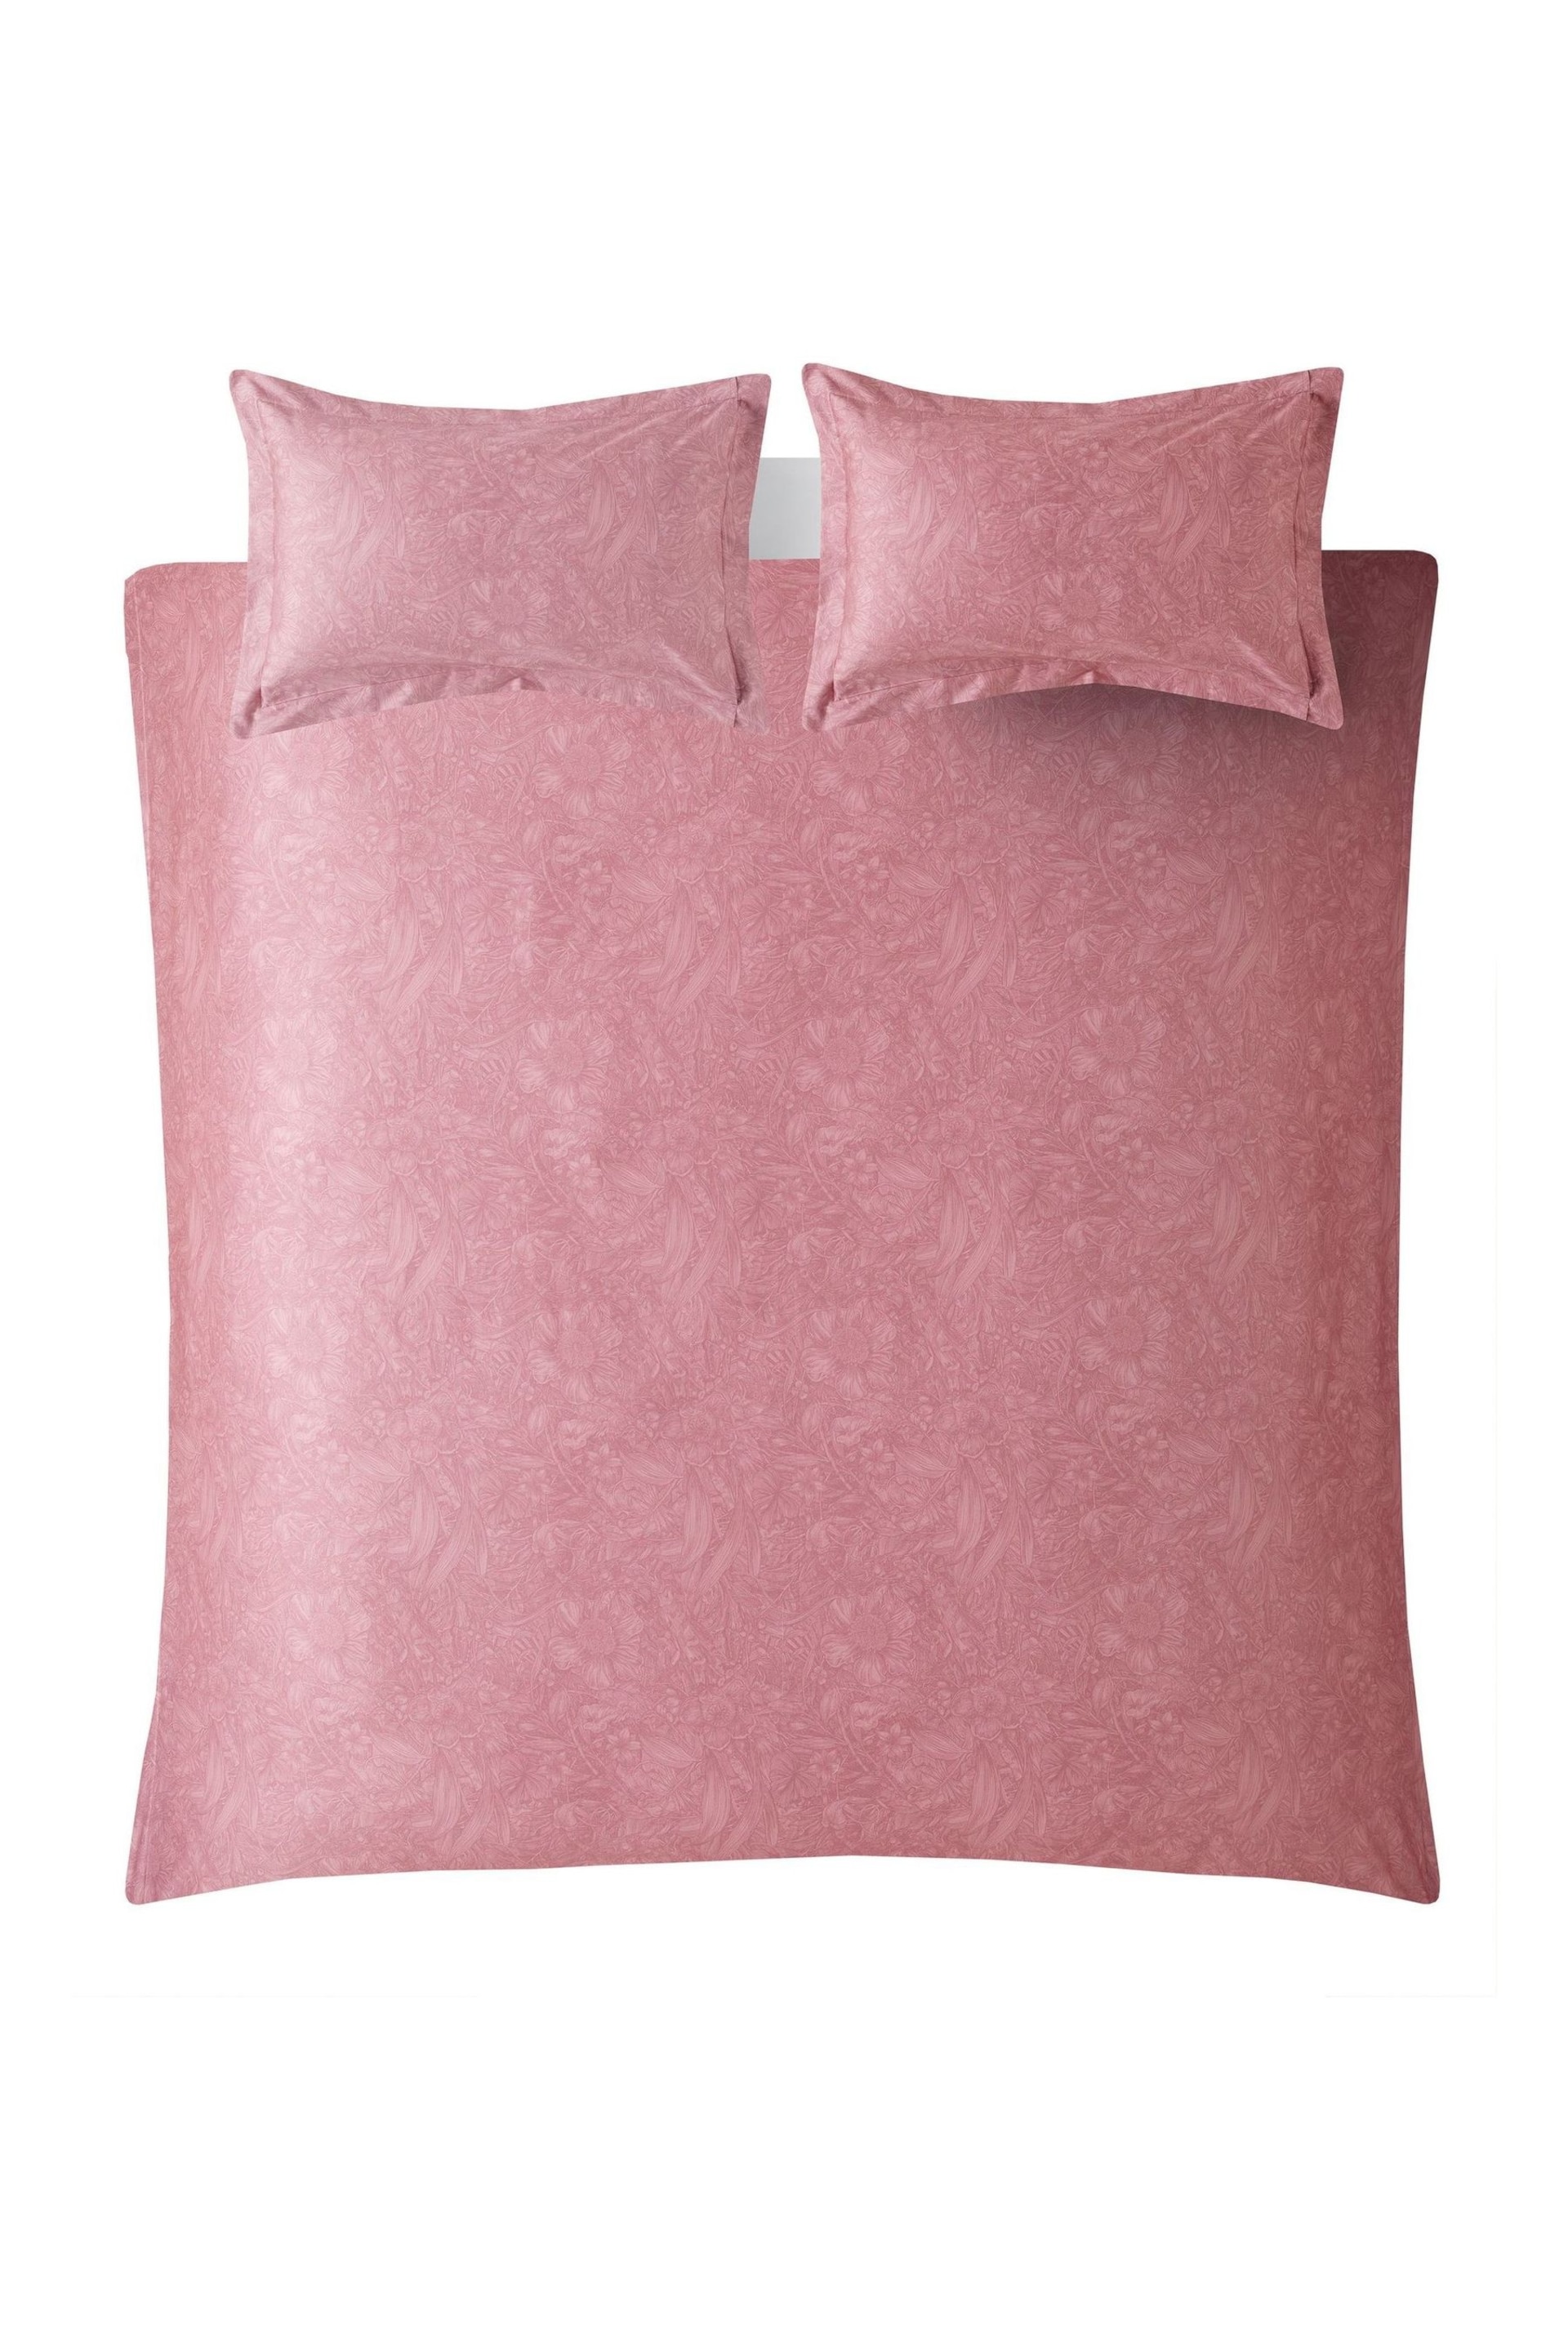 Timorous Beasties Midnight Berkeley Blooms Duvet Cover and Pillowcase Set - Image 5 of 8